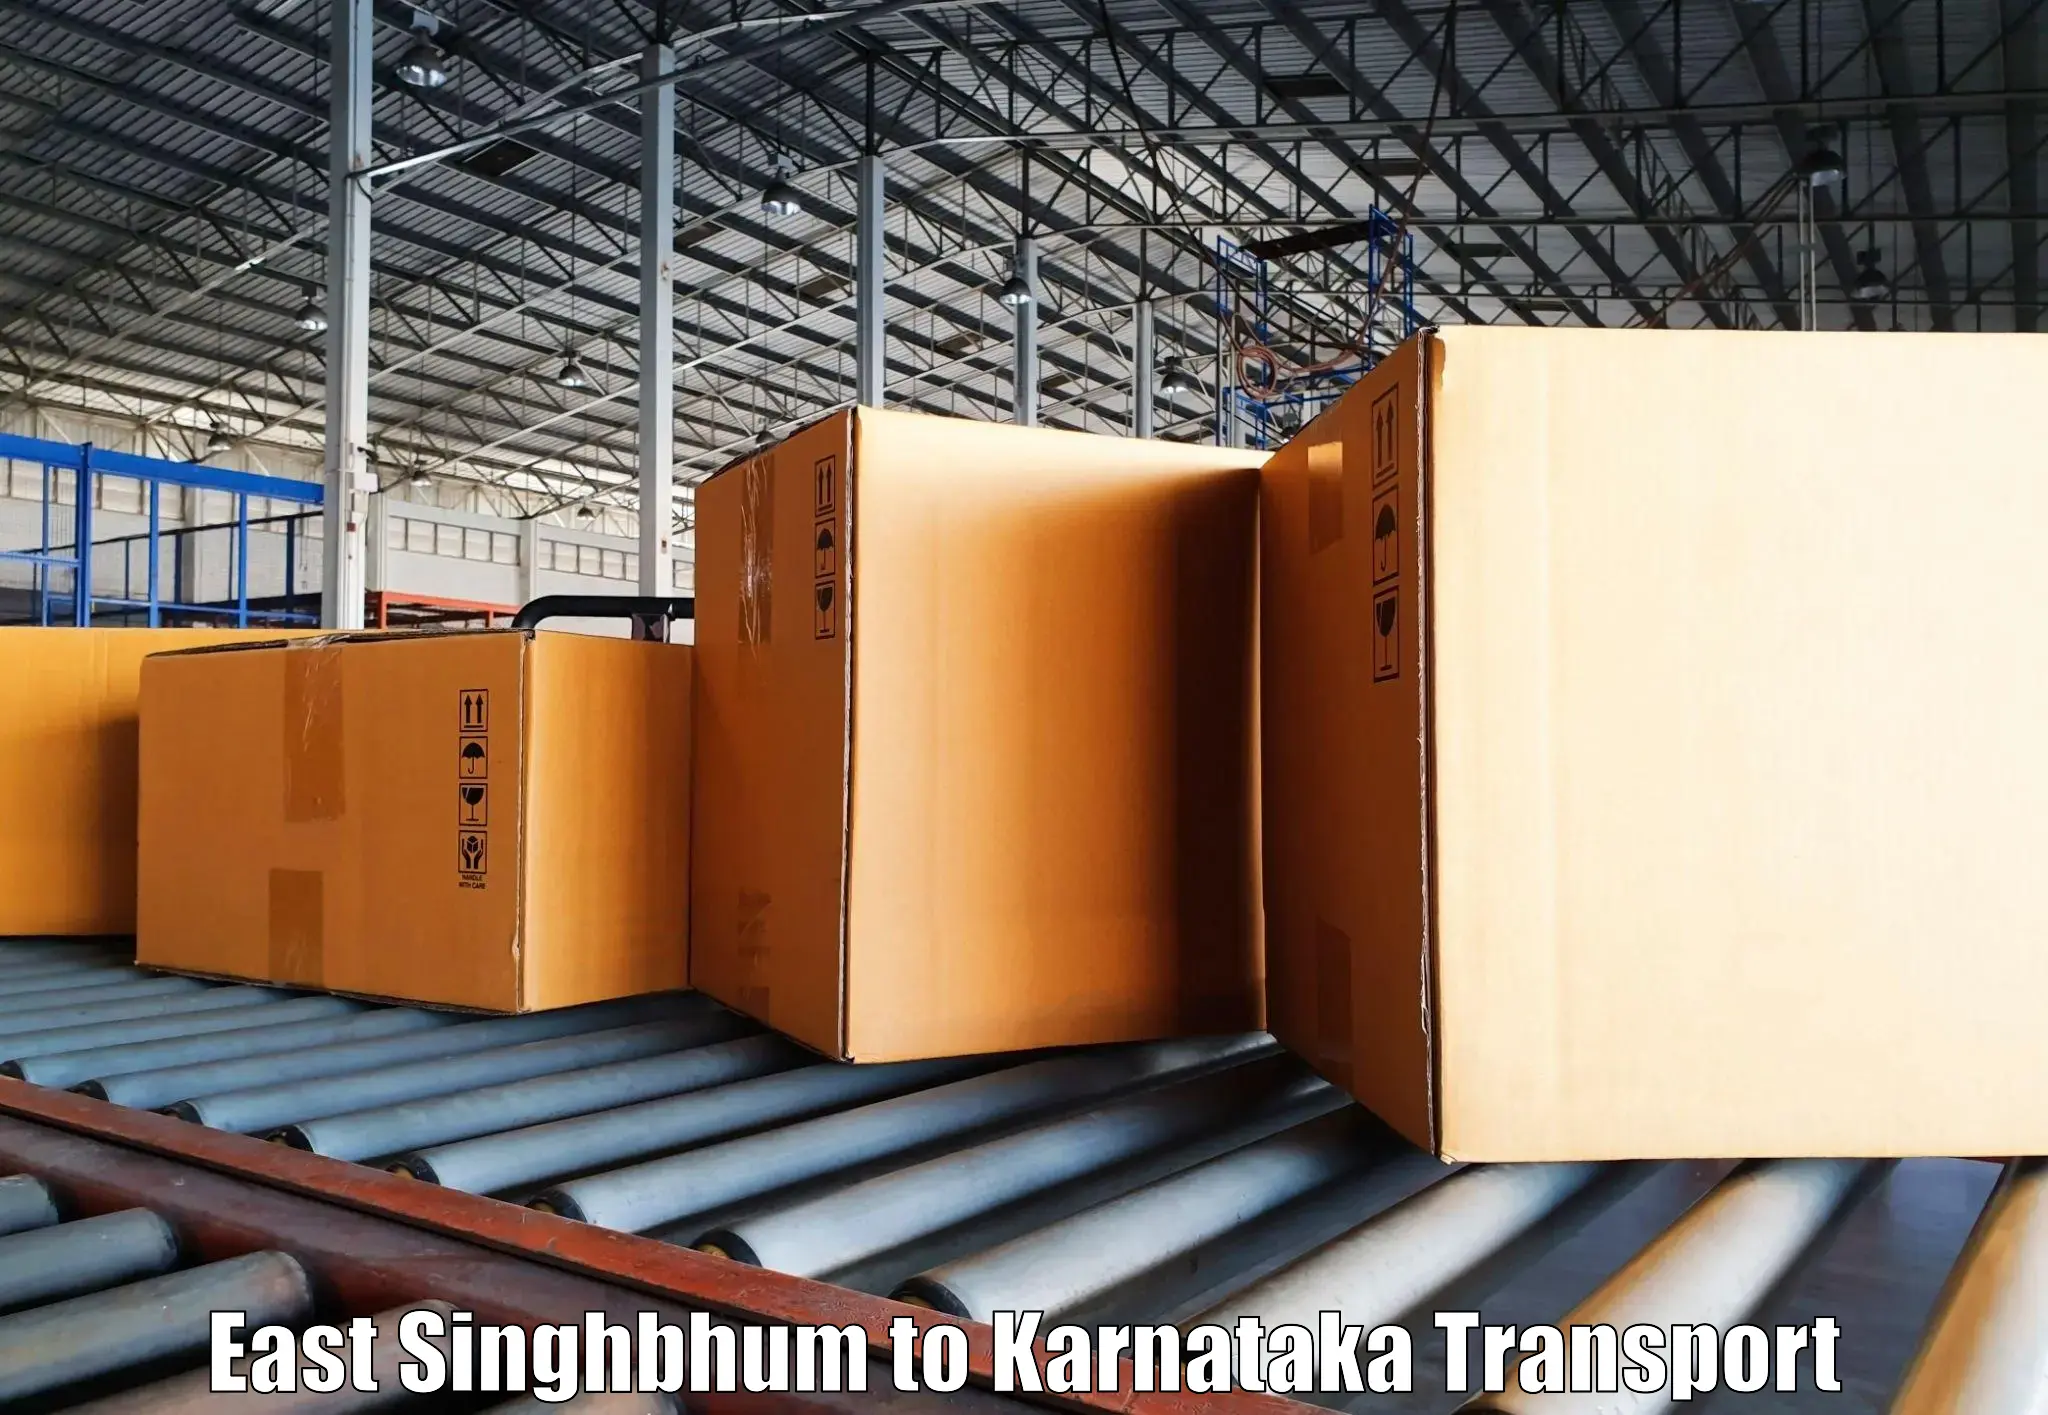 Furniture transport service East Singhbhum to Davangere